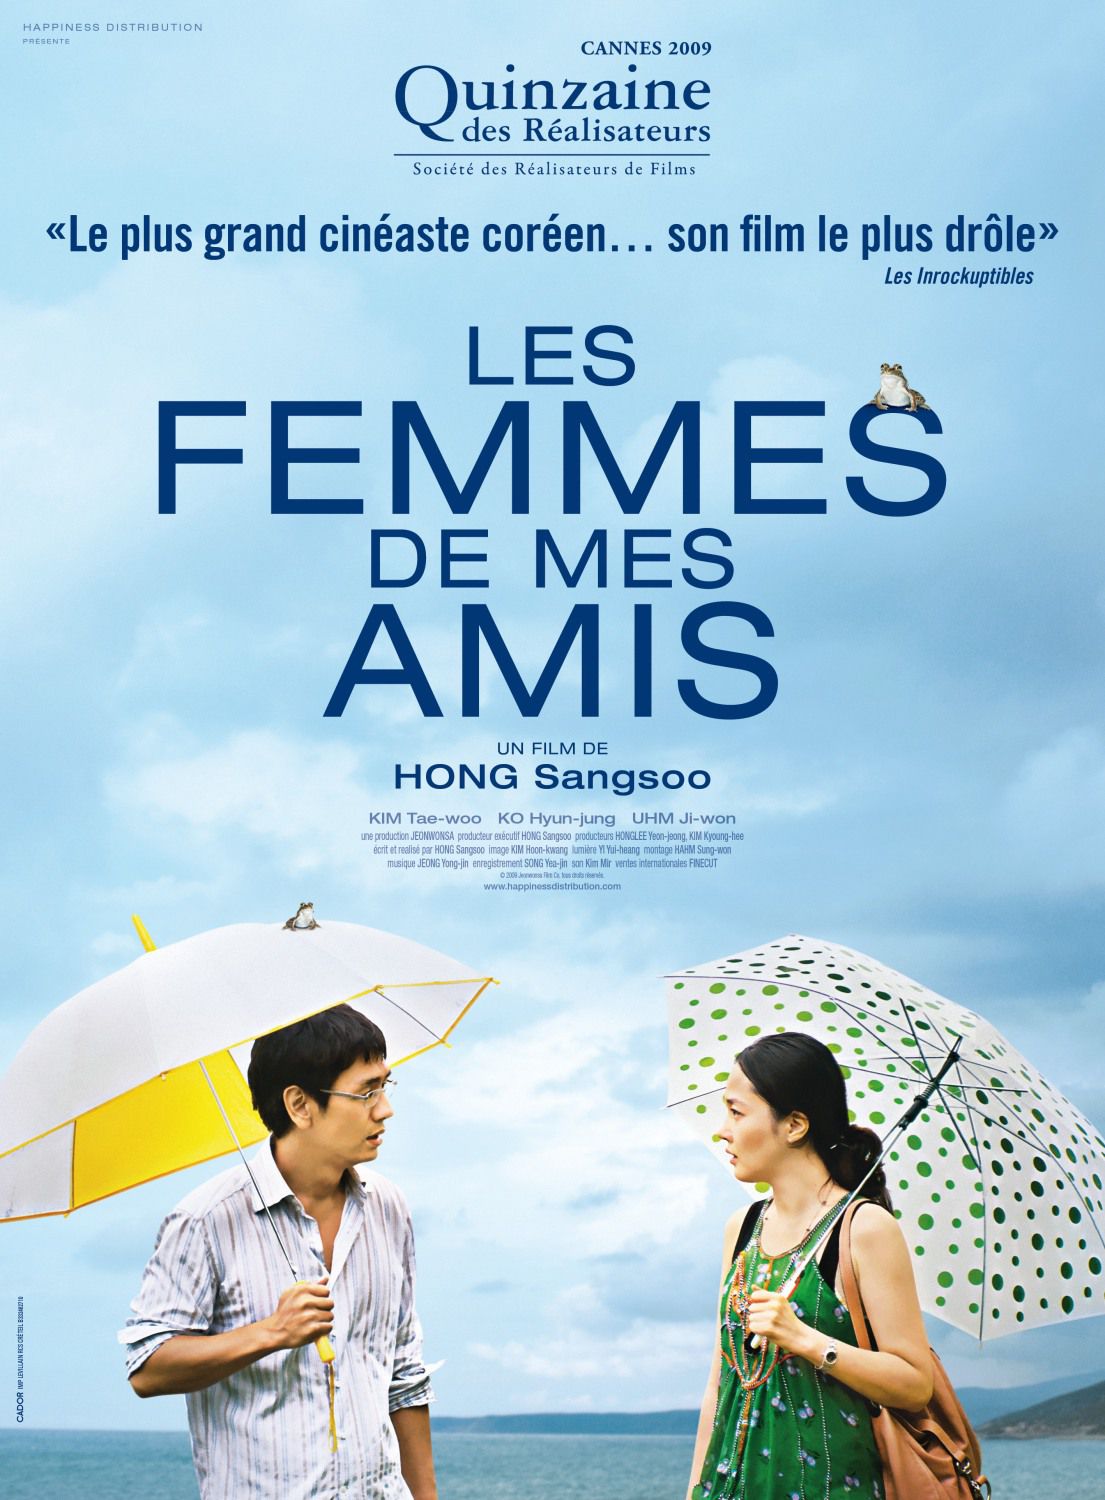 Les Femmes de mes amis - Film (2009) streaming VF gratuit complet